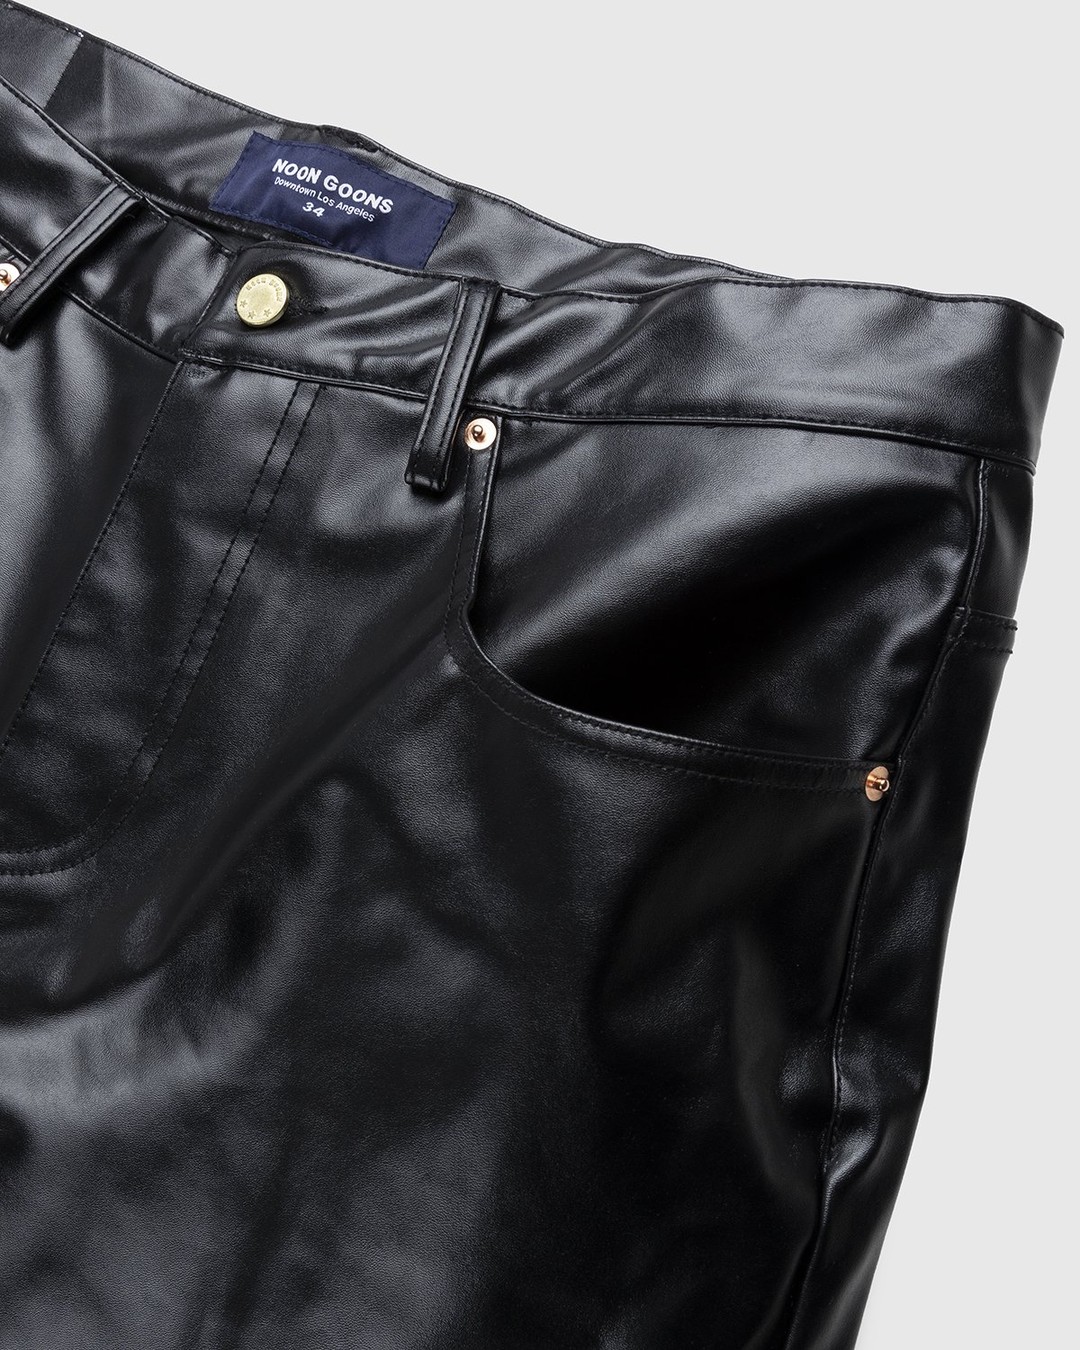 Noon Goons – Series Leather Pant Black - Leather Pants - Black - Image 4